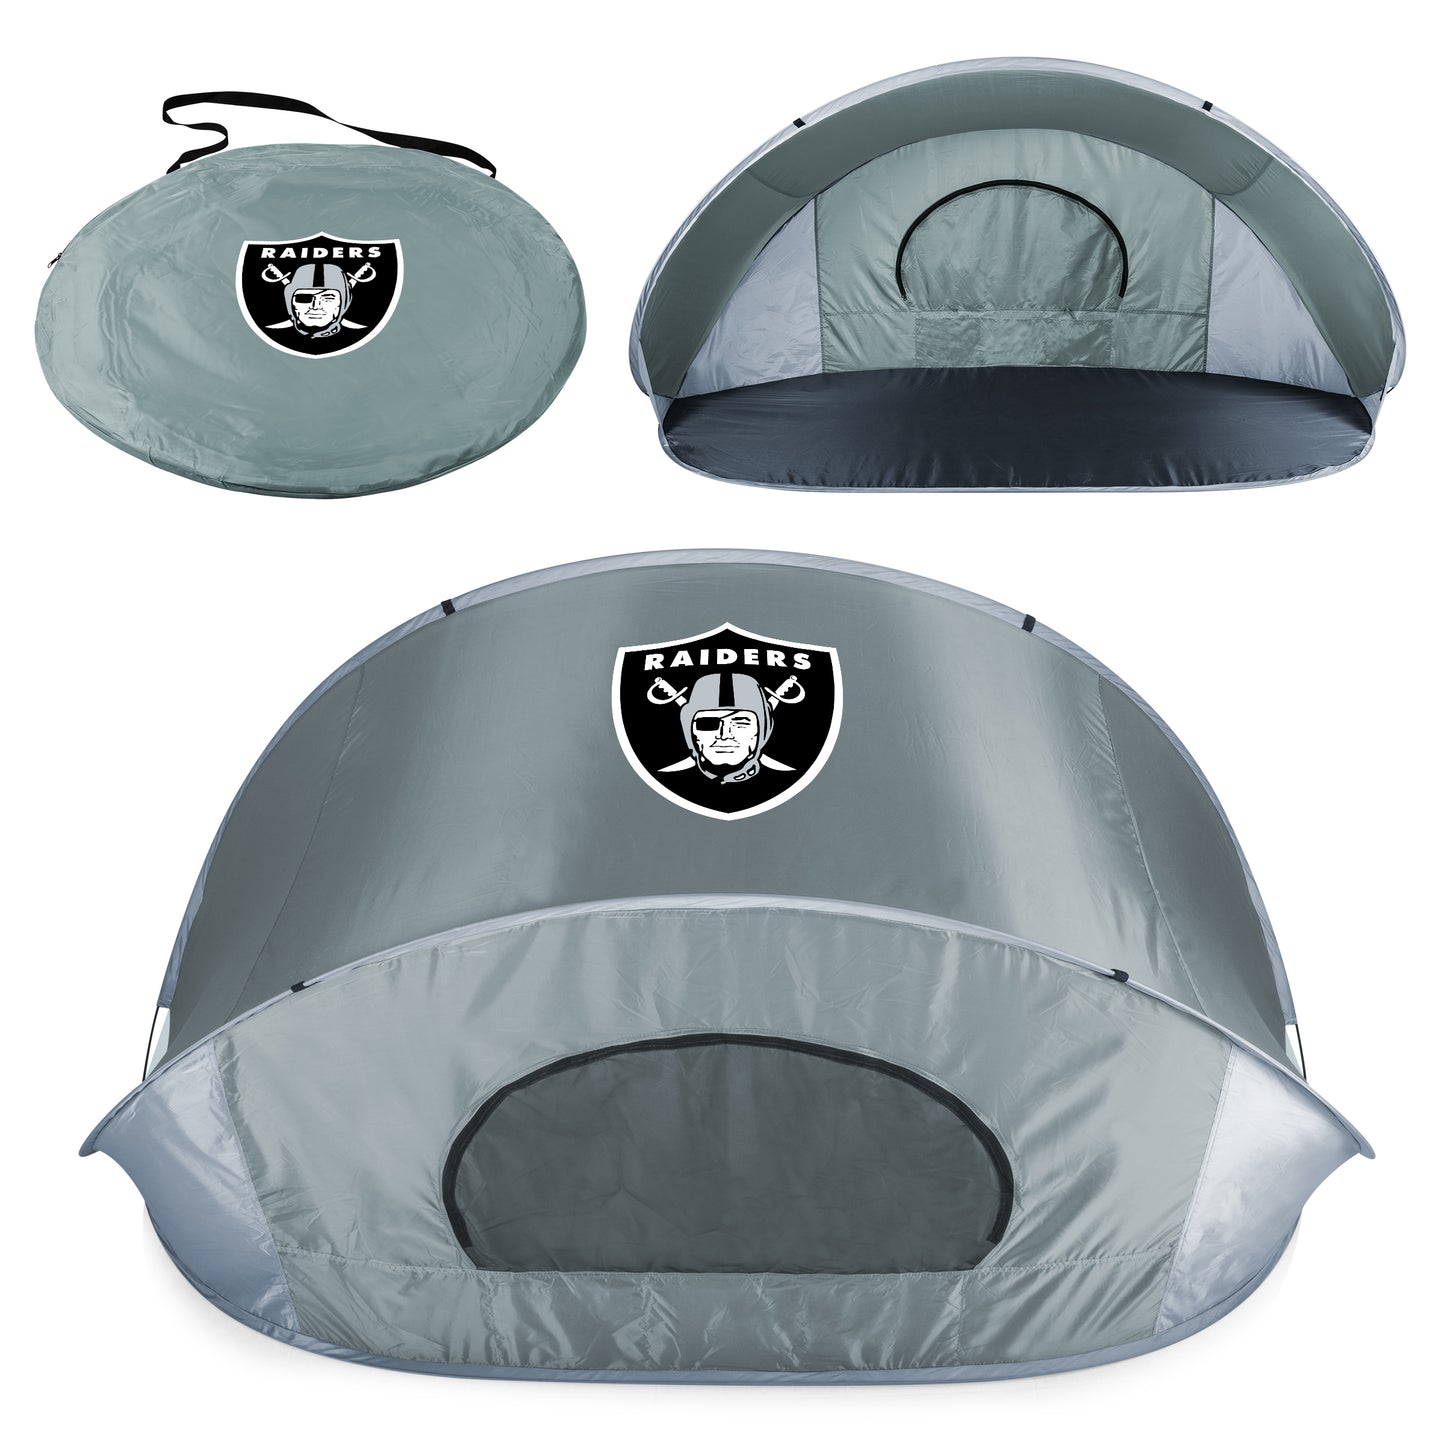 Las Vegas Raiders Manta Portable Beach Tent, (Gray with Black Accents)